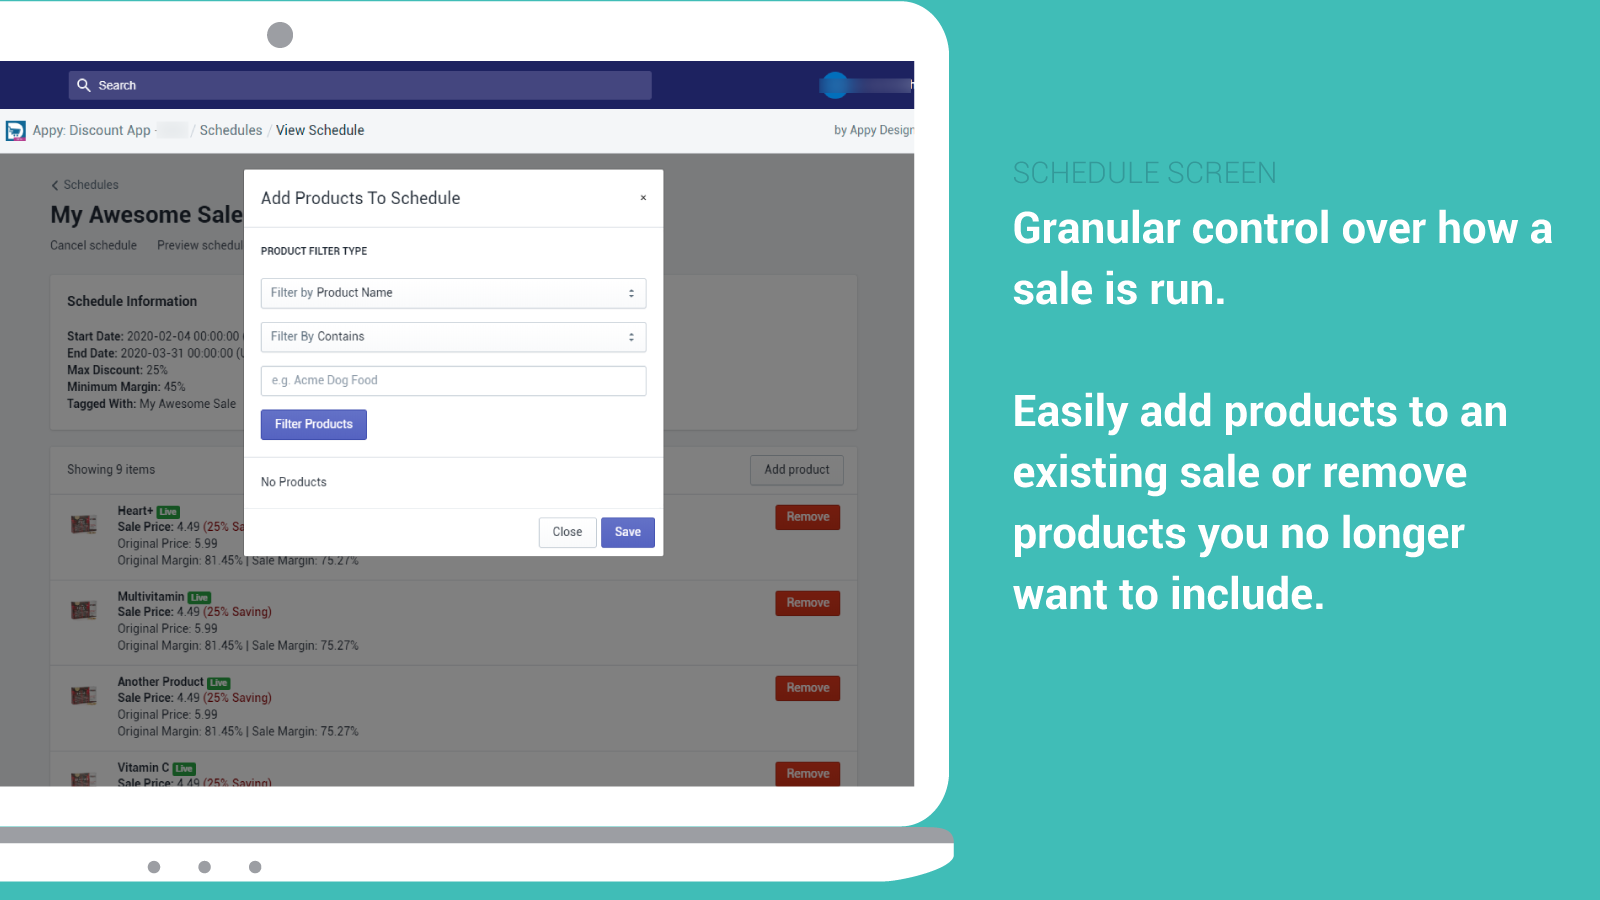 Granular control - Appy Sales and Discounts App